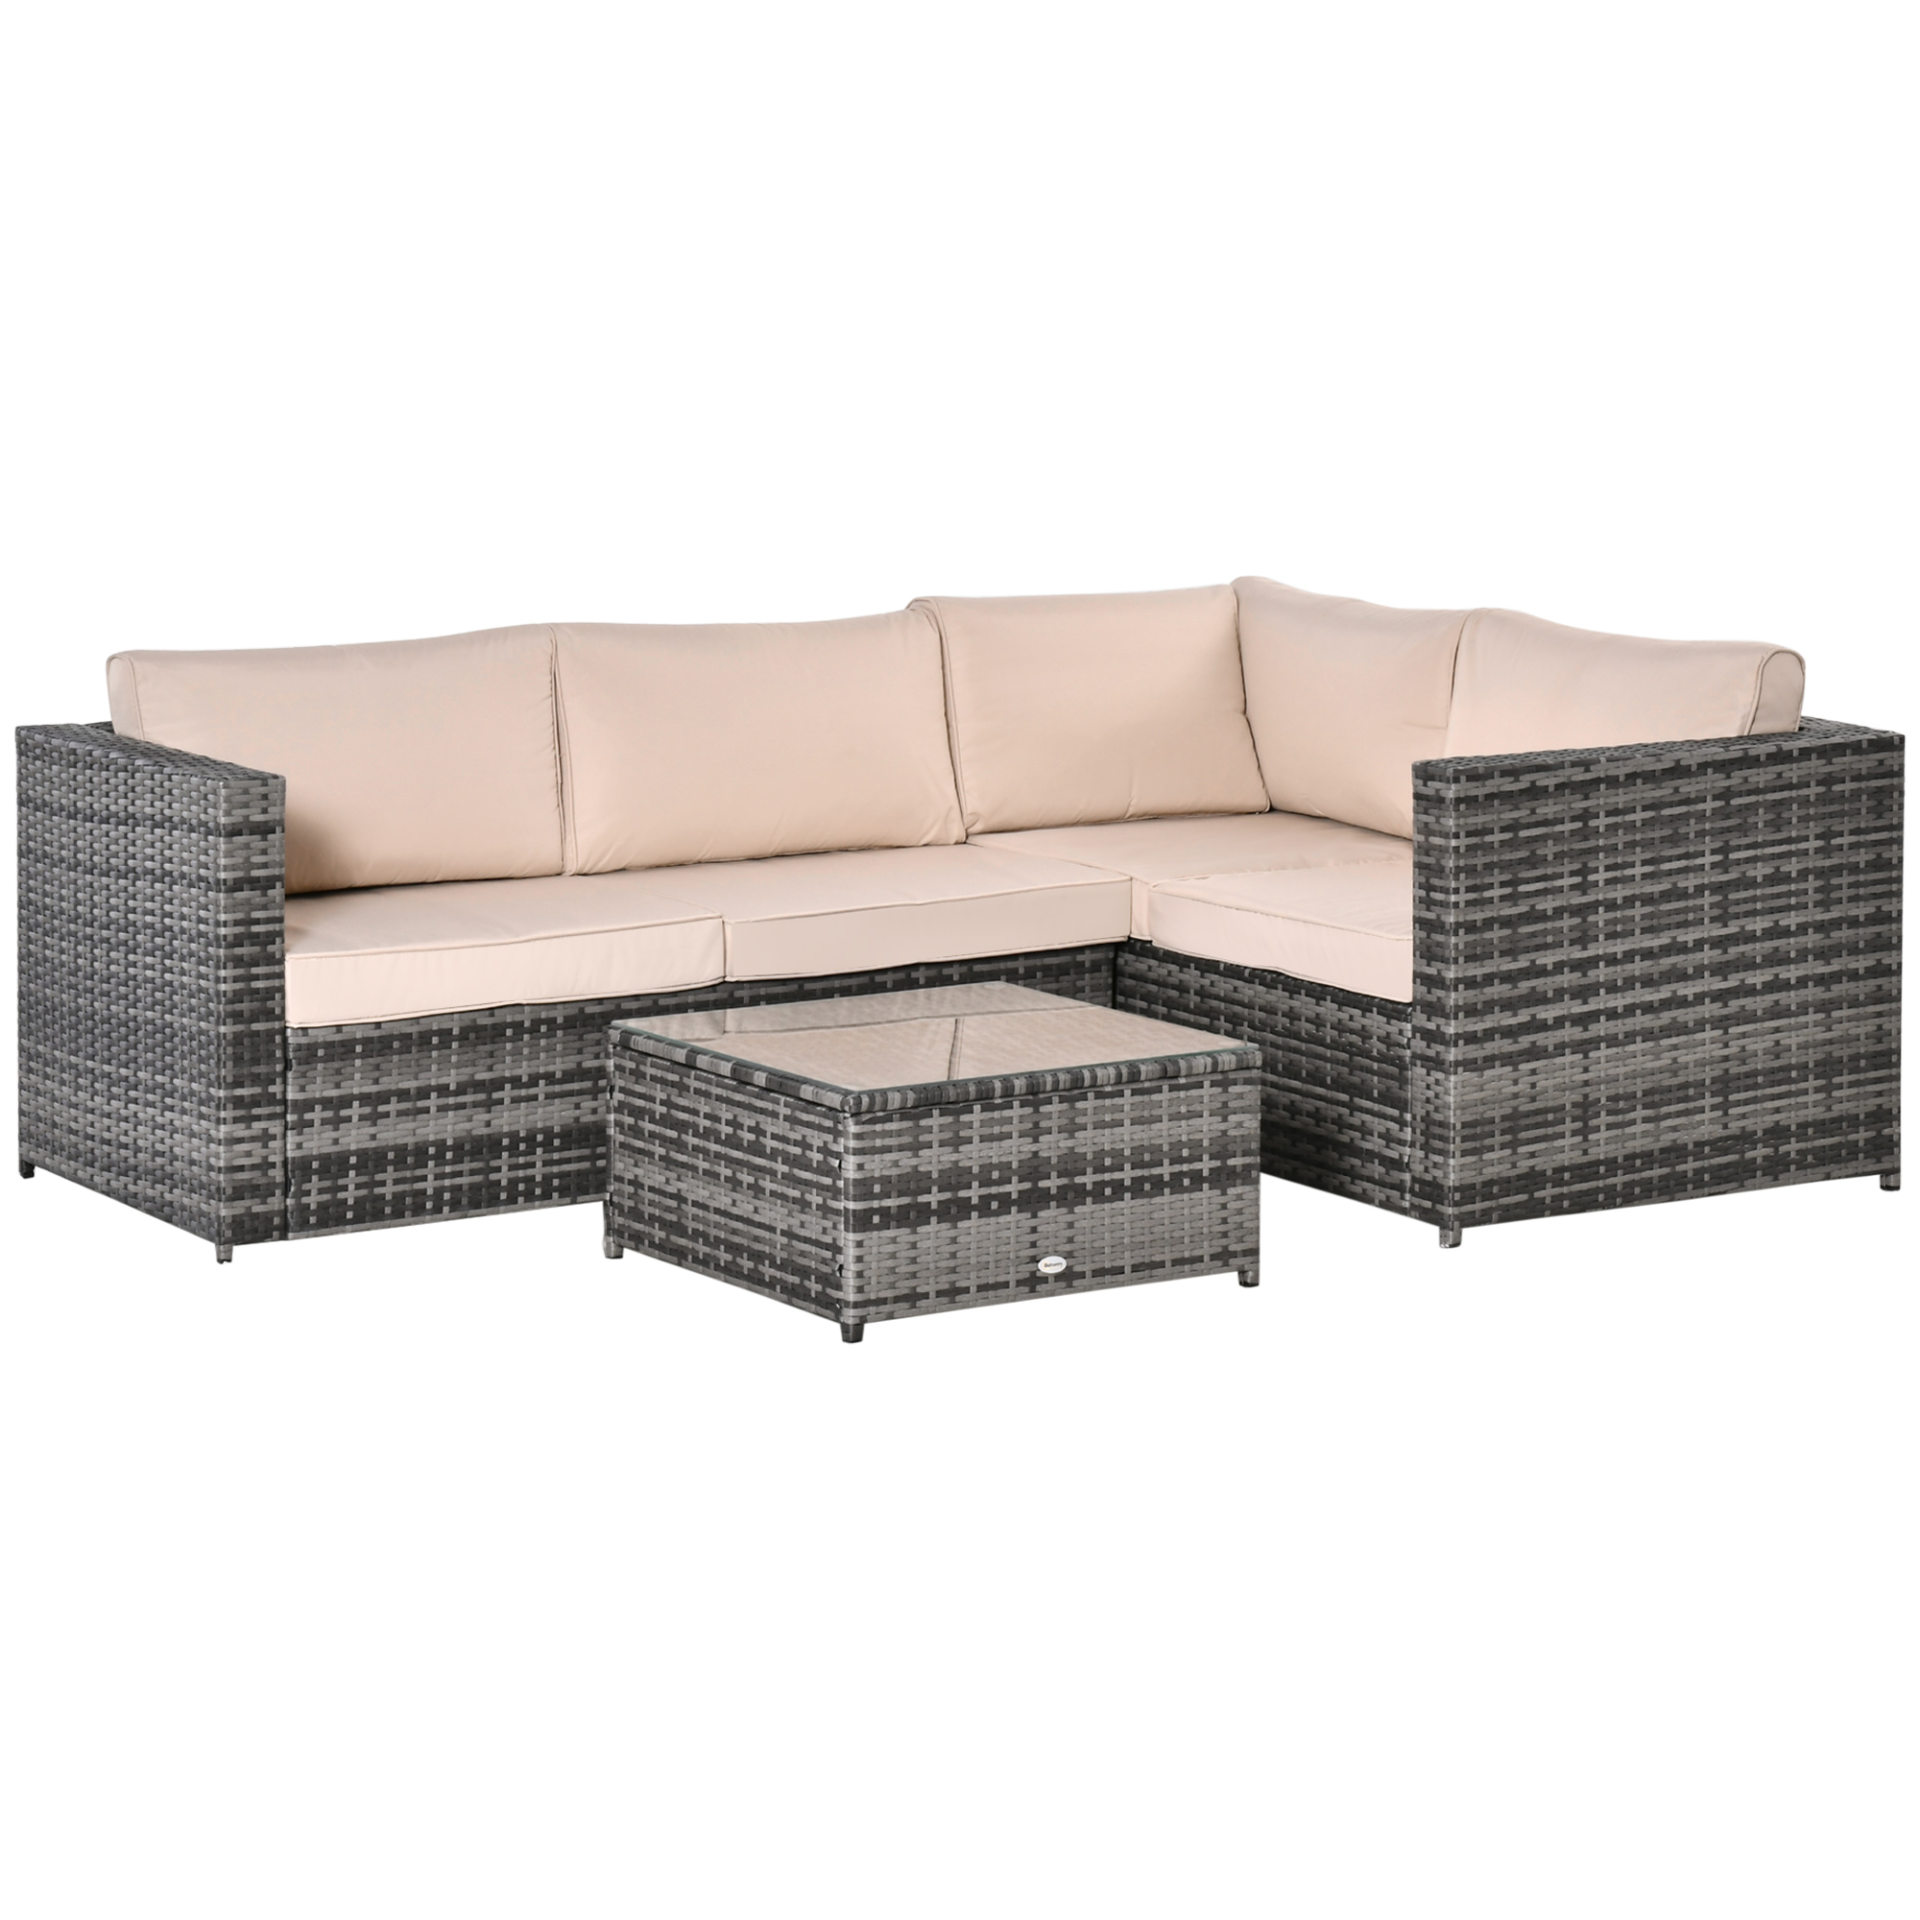 Outsunny 3Pcs Rattan Garden Furniture 4 Seater Outdoor Patio Corner Sofa Chair S